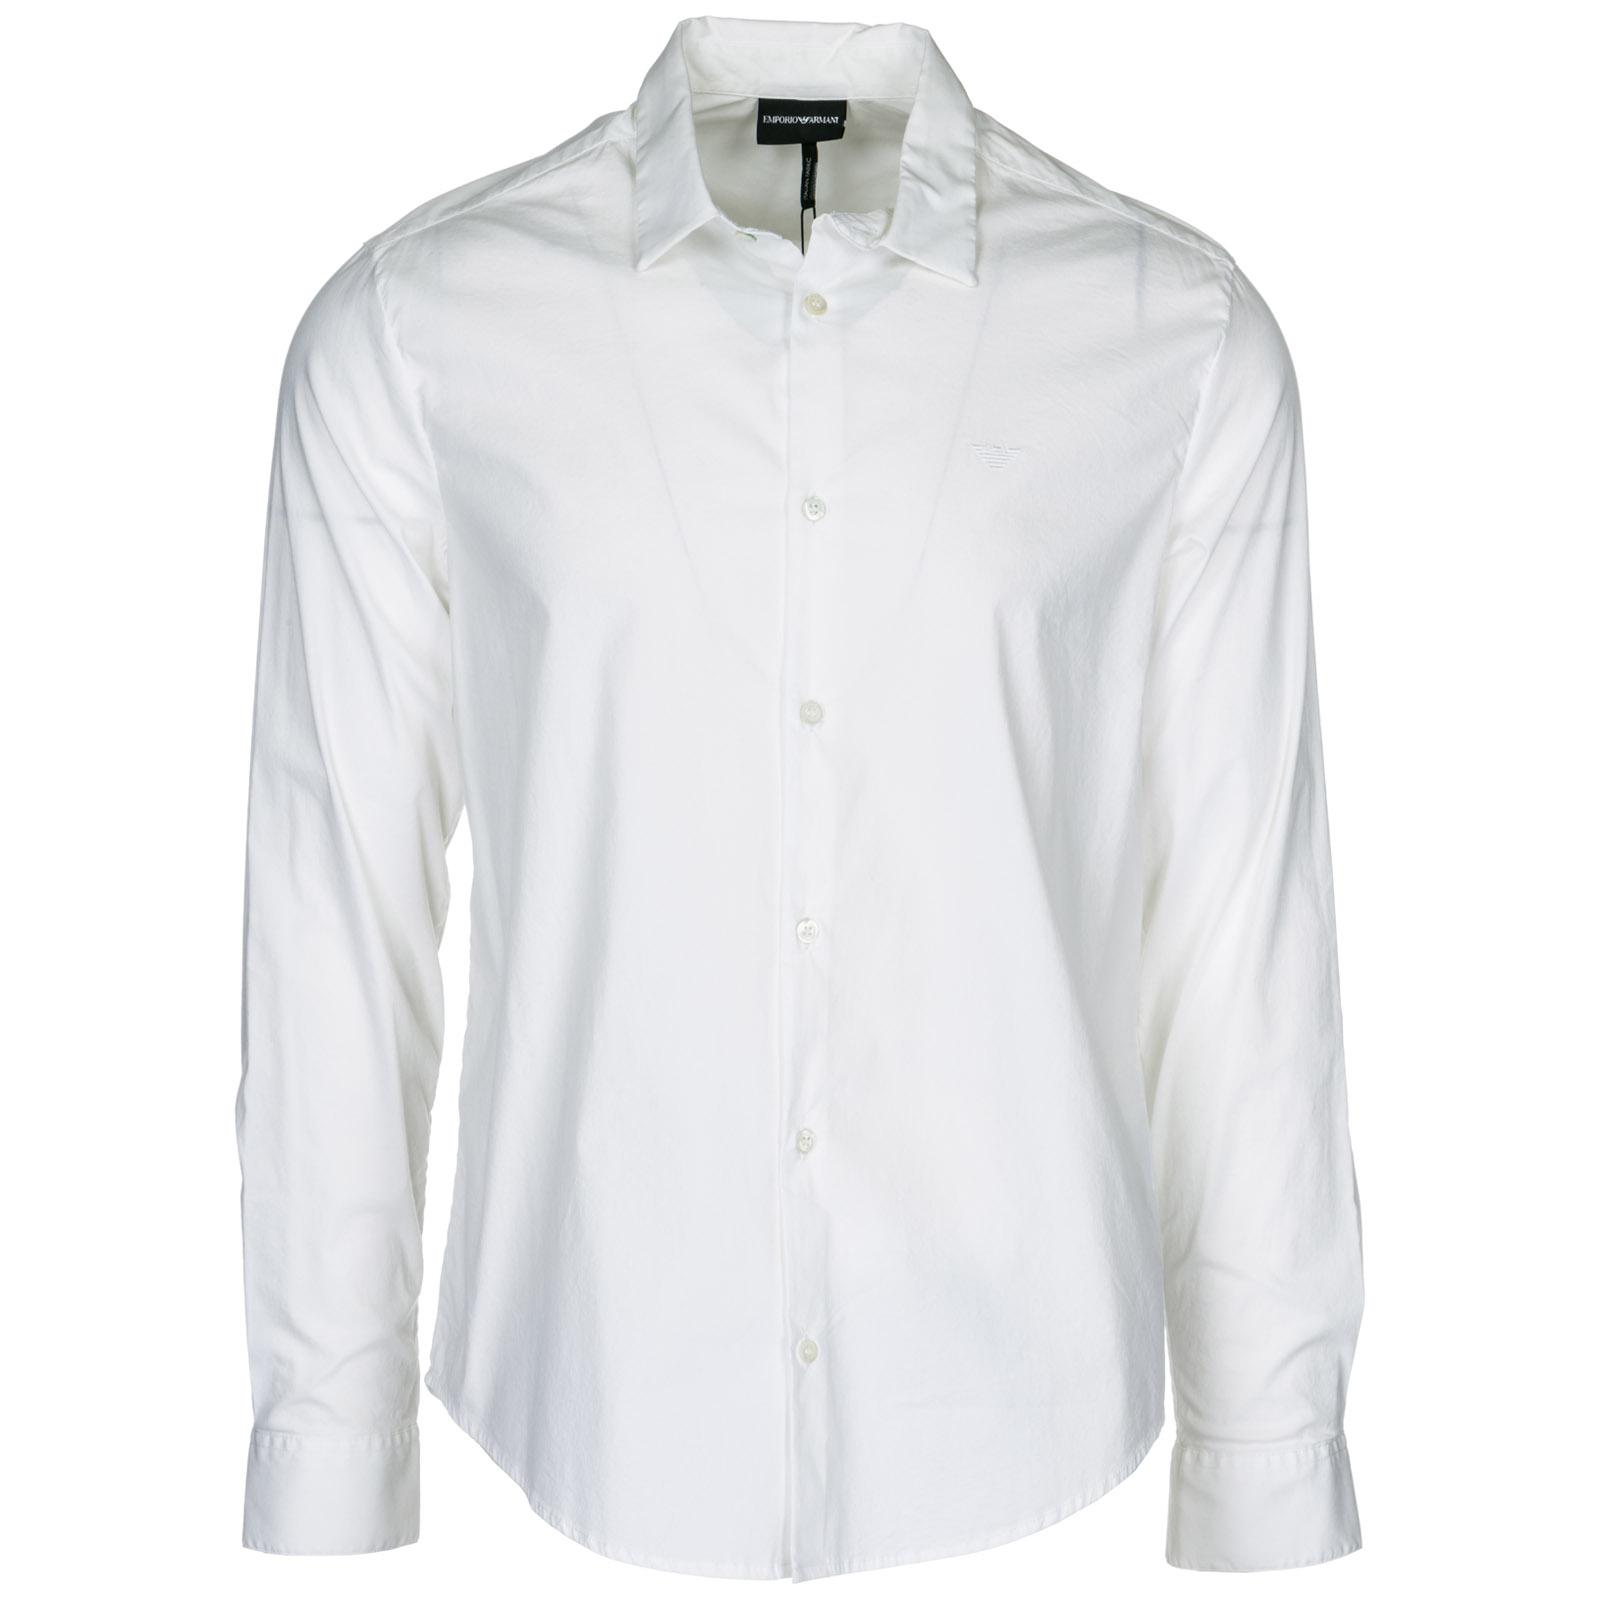 Emporio Armani Long Sleeve Shirt Dress Shirt in White for Men - Lyst